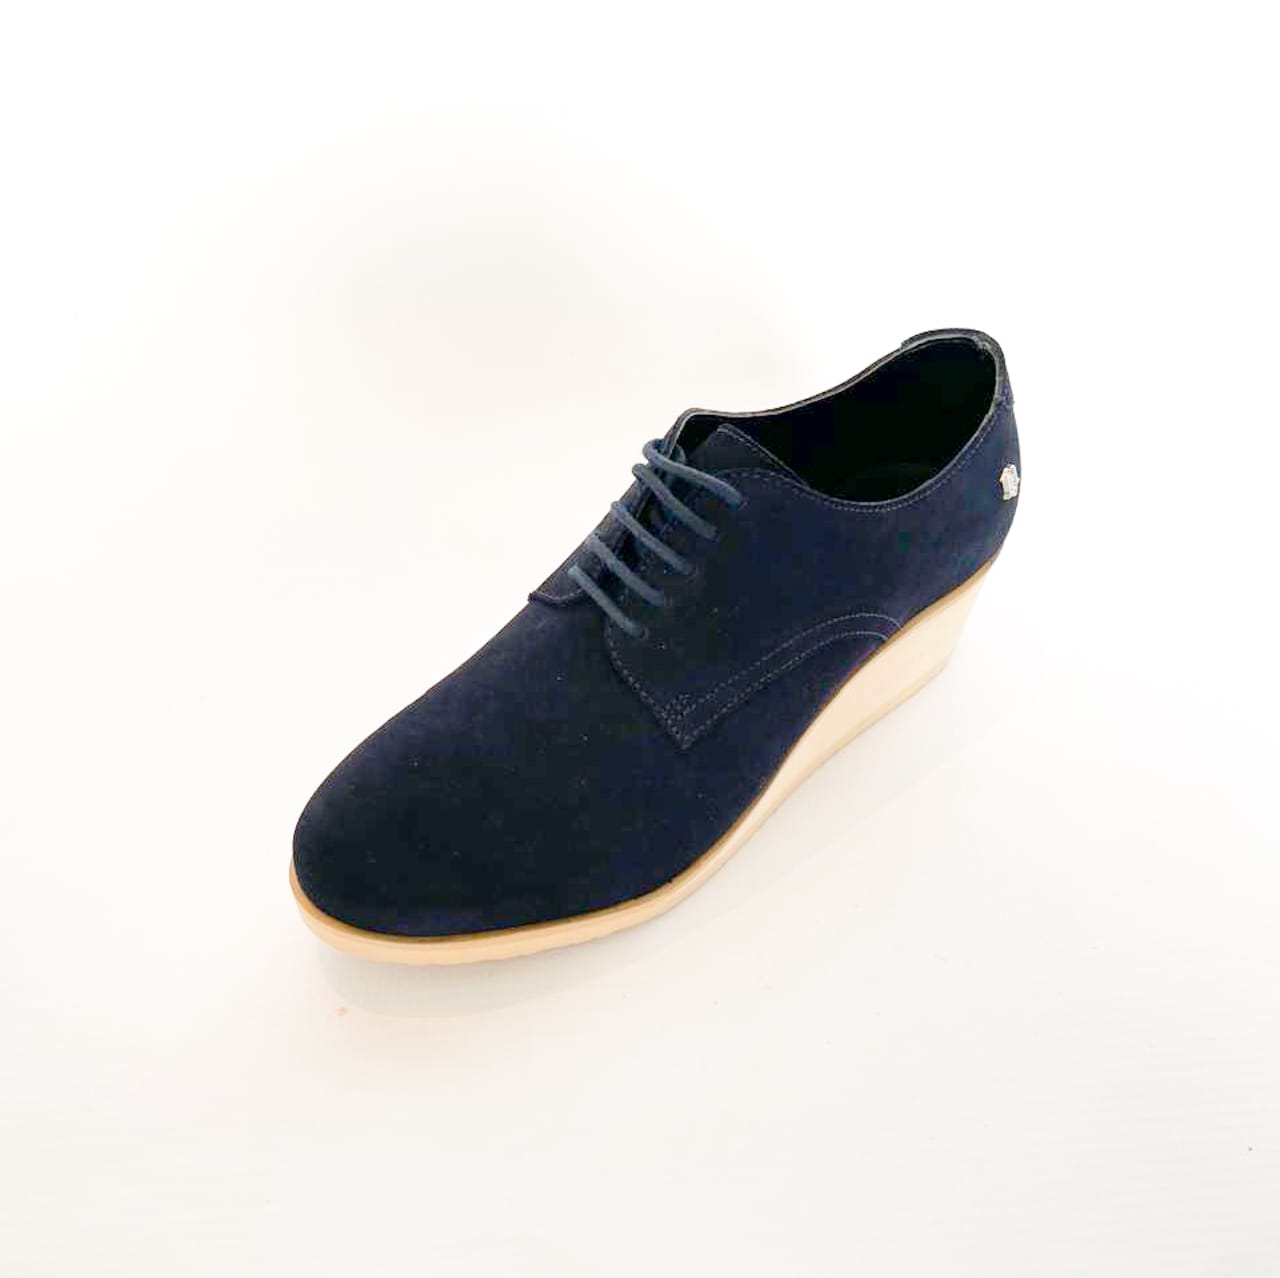 Nicci Tyler - Morrison leather navy wedge shoe